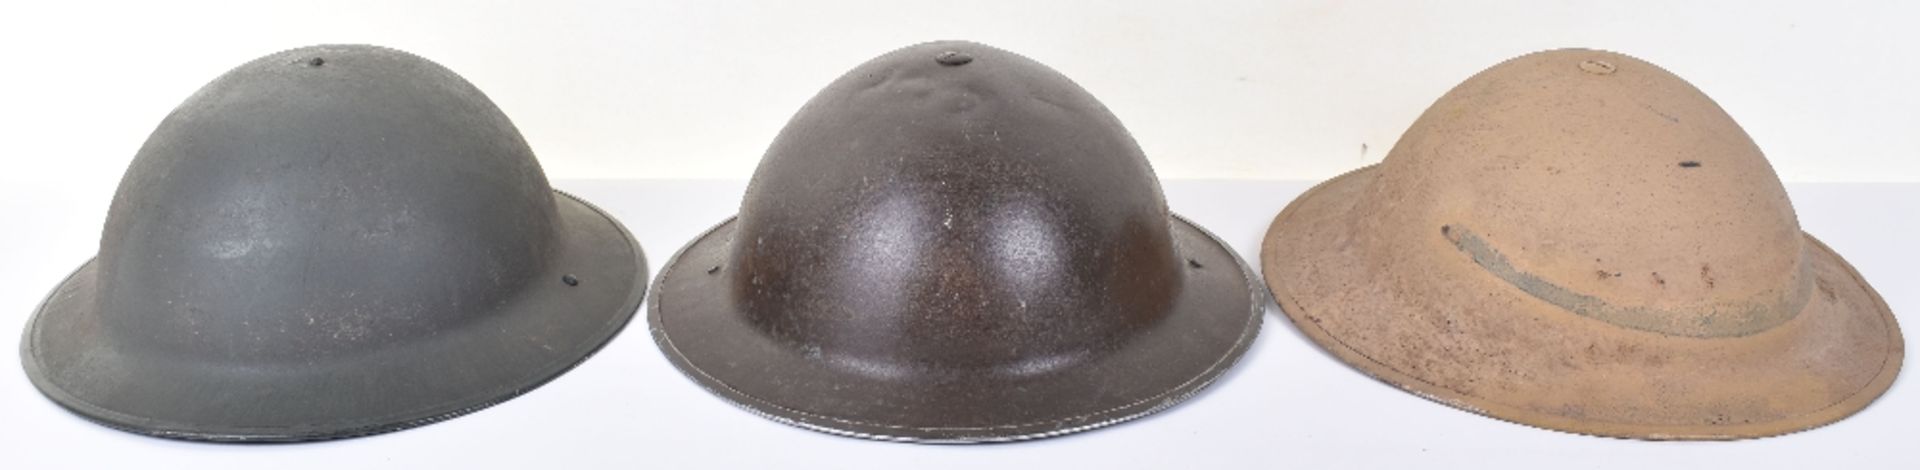 3x WW2 Steel Helmets - Image 4 of 5